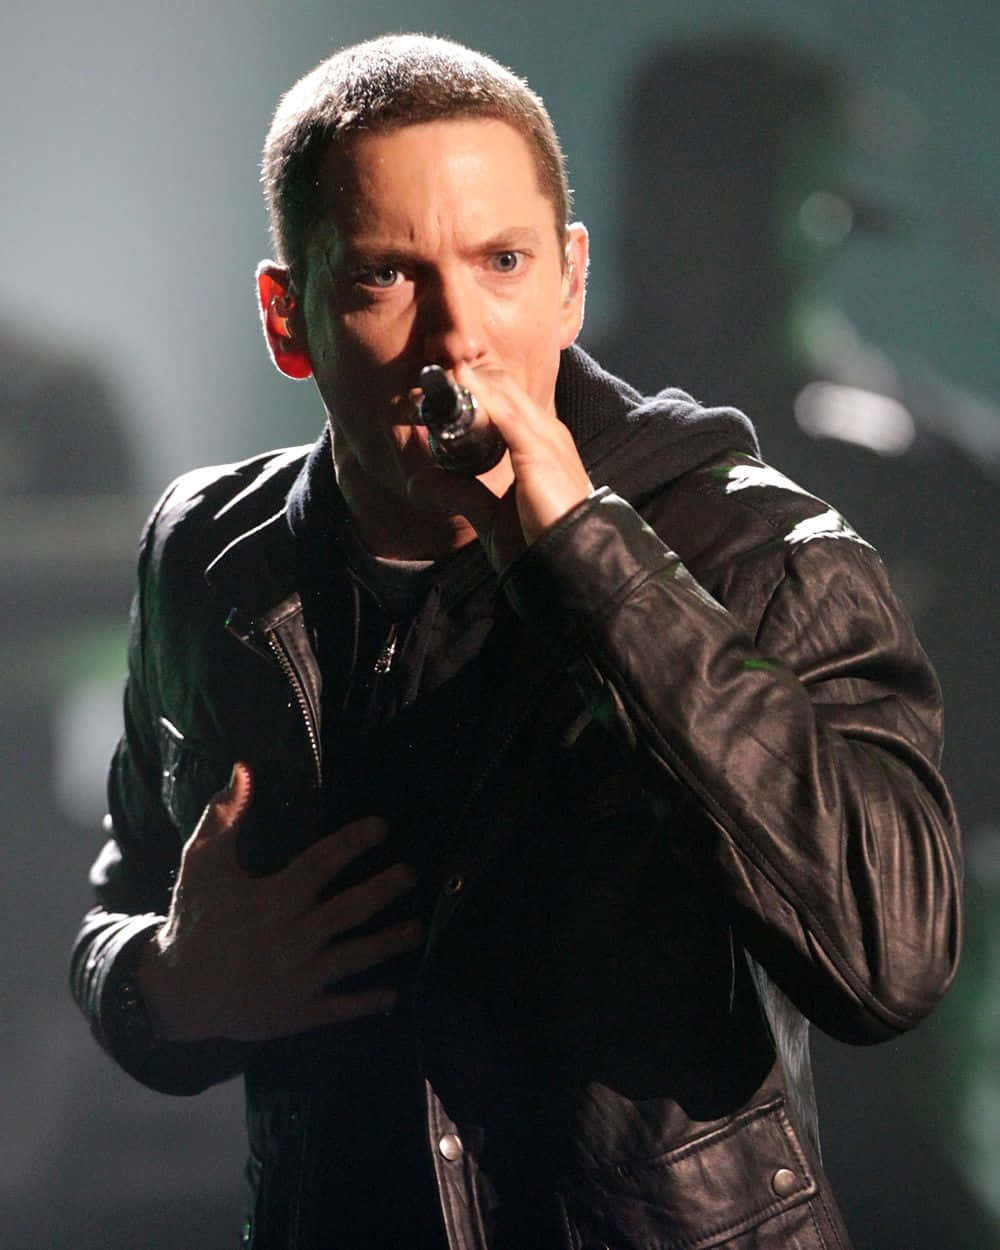 Eminem - The Rap God in Focus